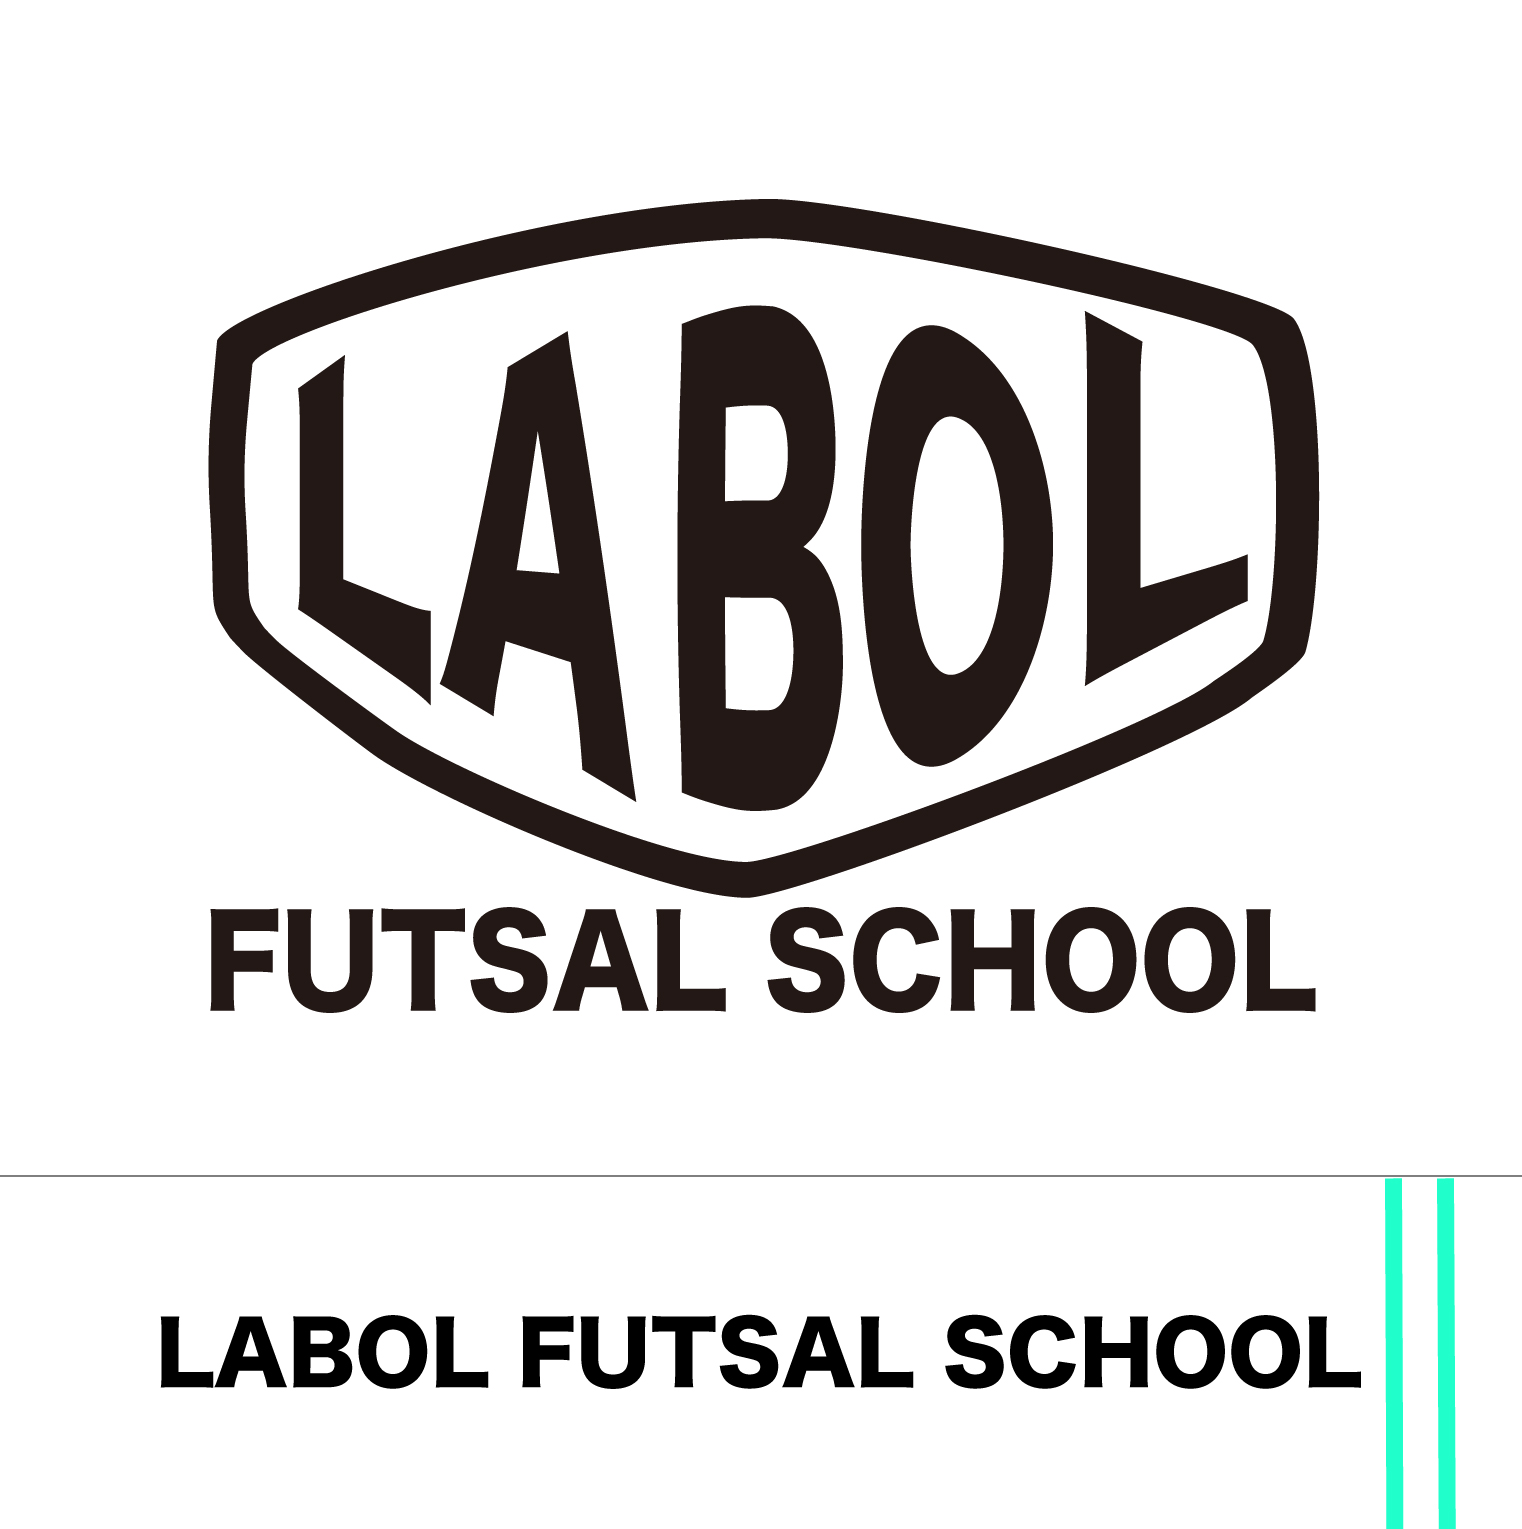 LABOL FUTSAL SCHOOL